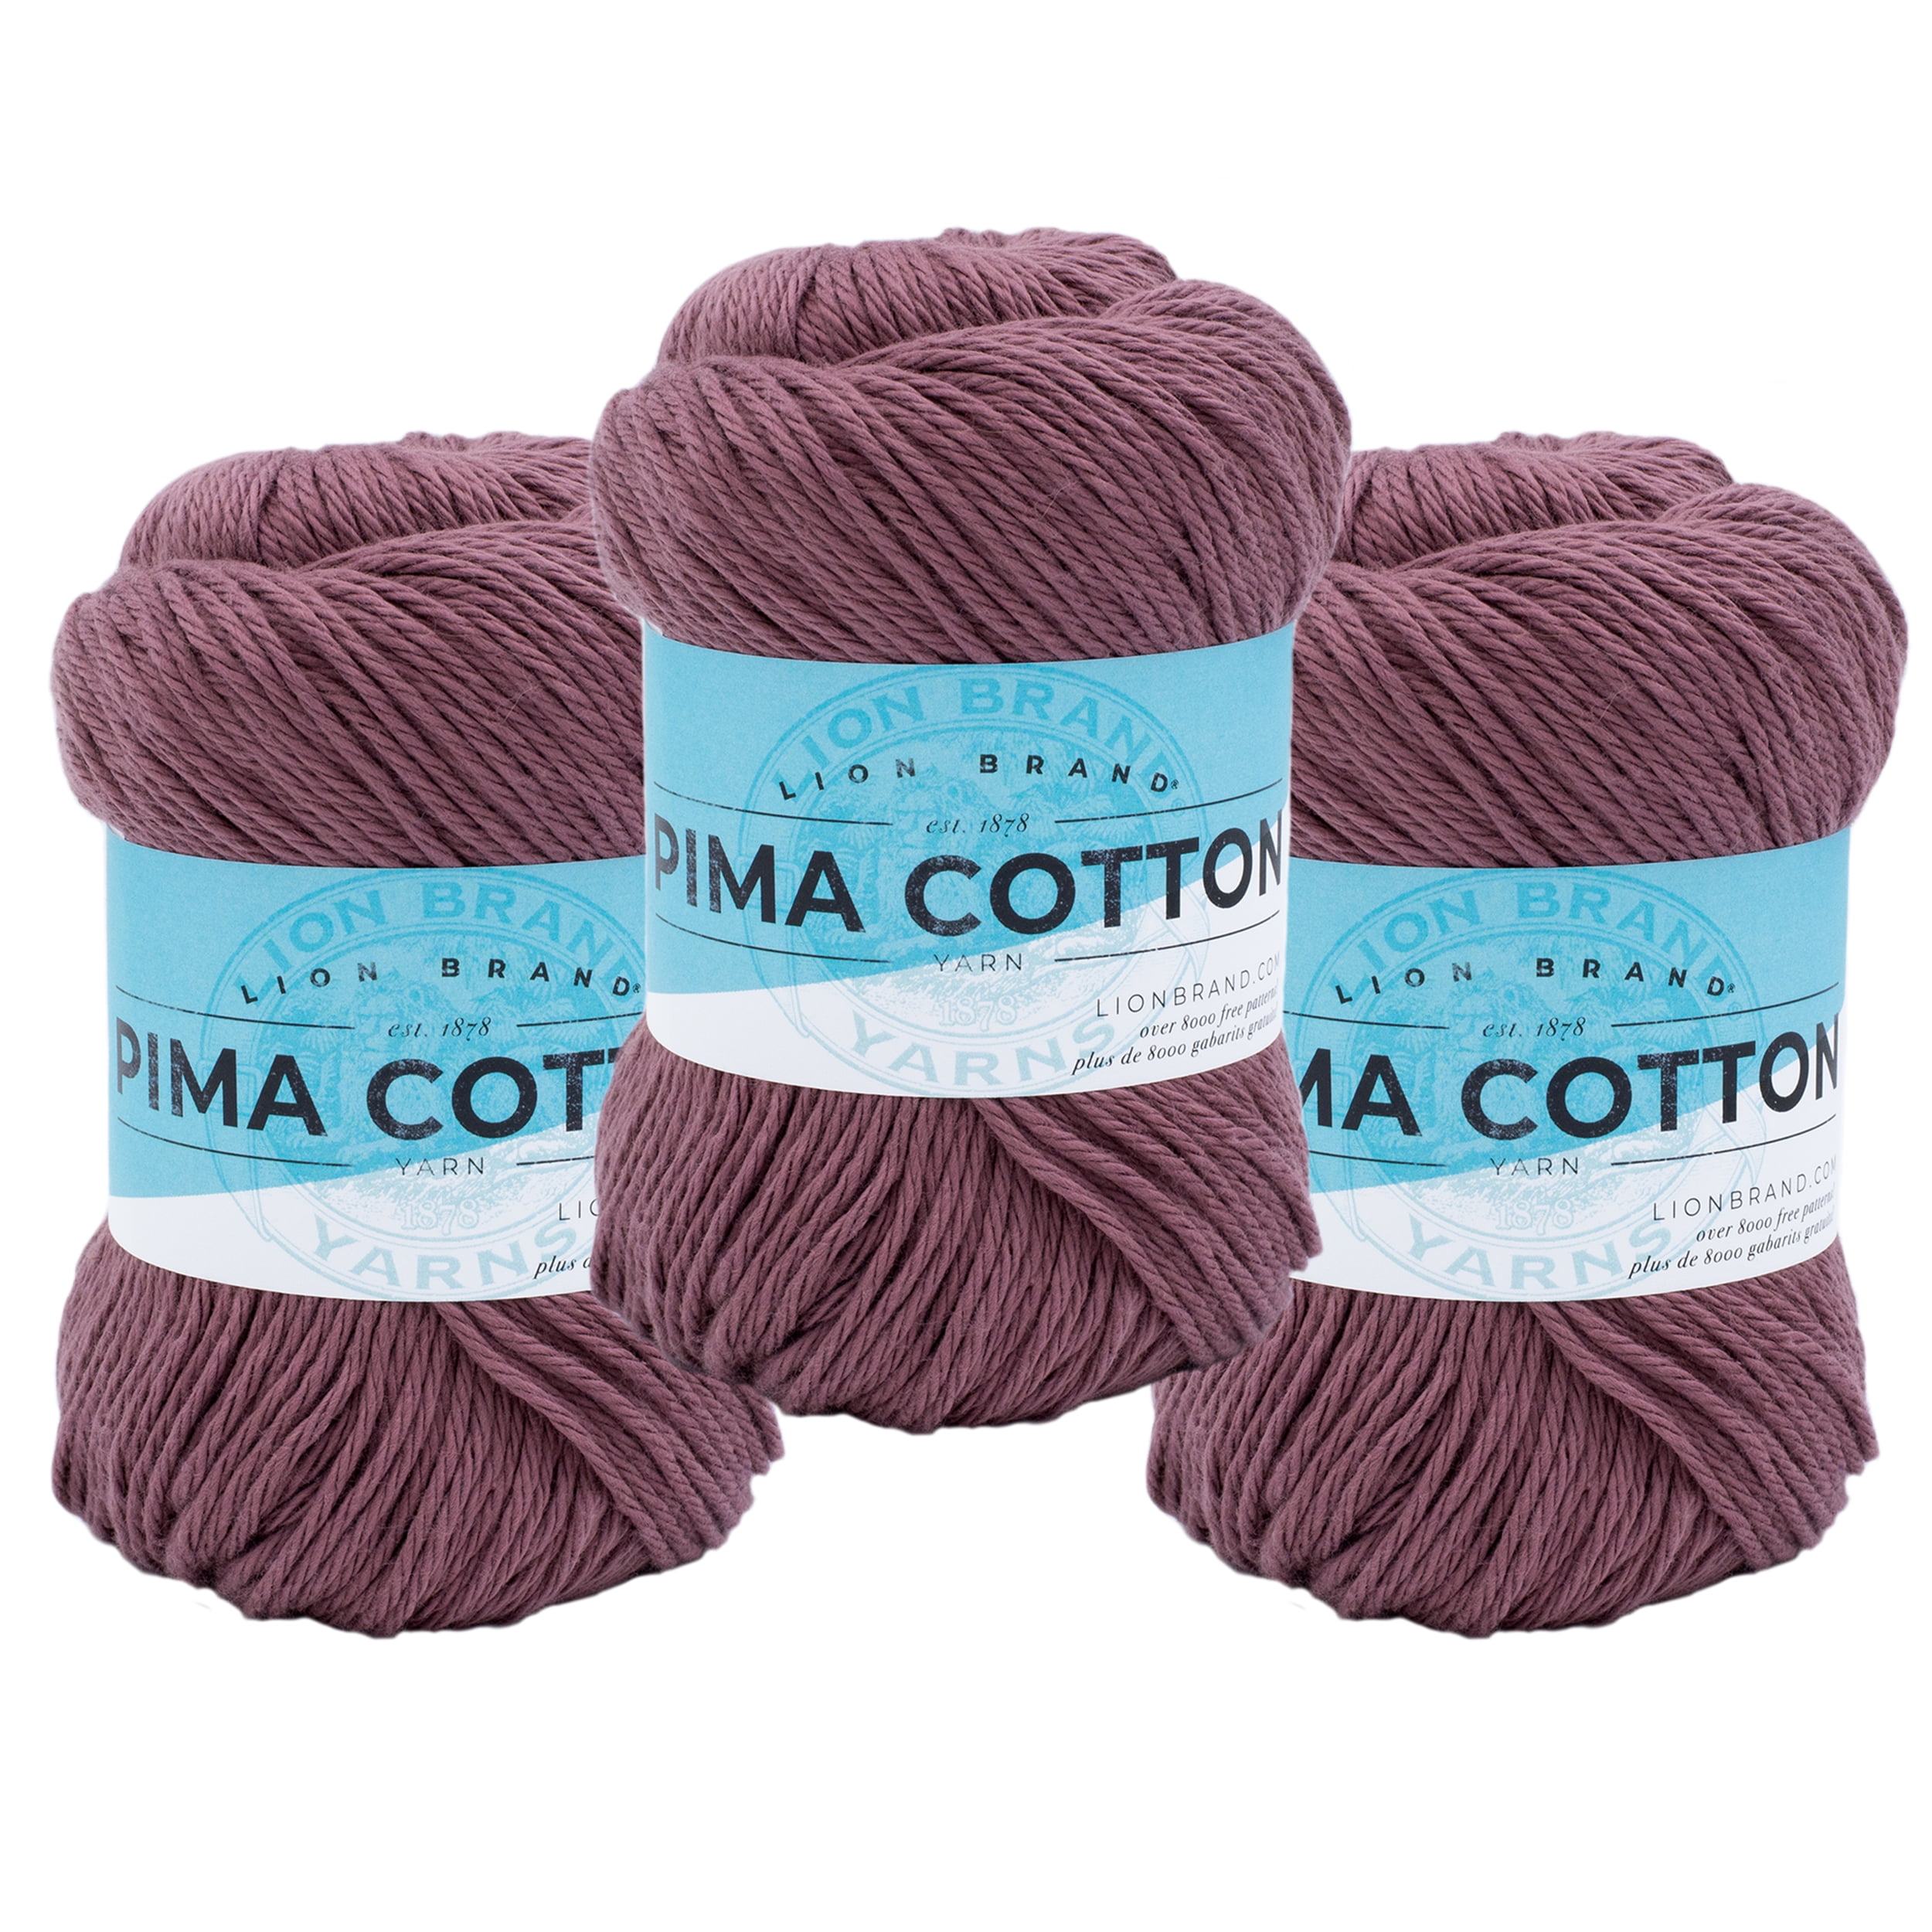 Lion Brand Yarn Pima Cotton Rose Taupe Basic Medium Cotton Purple Yarn 3  Pack 